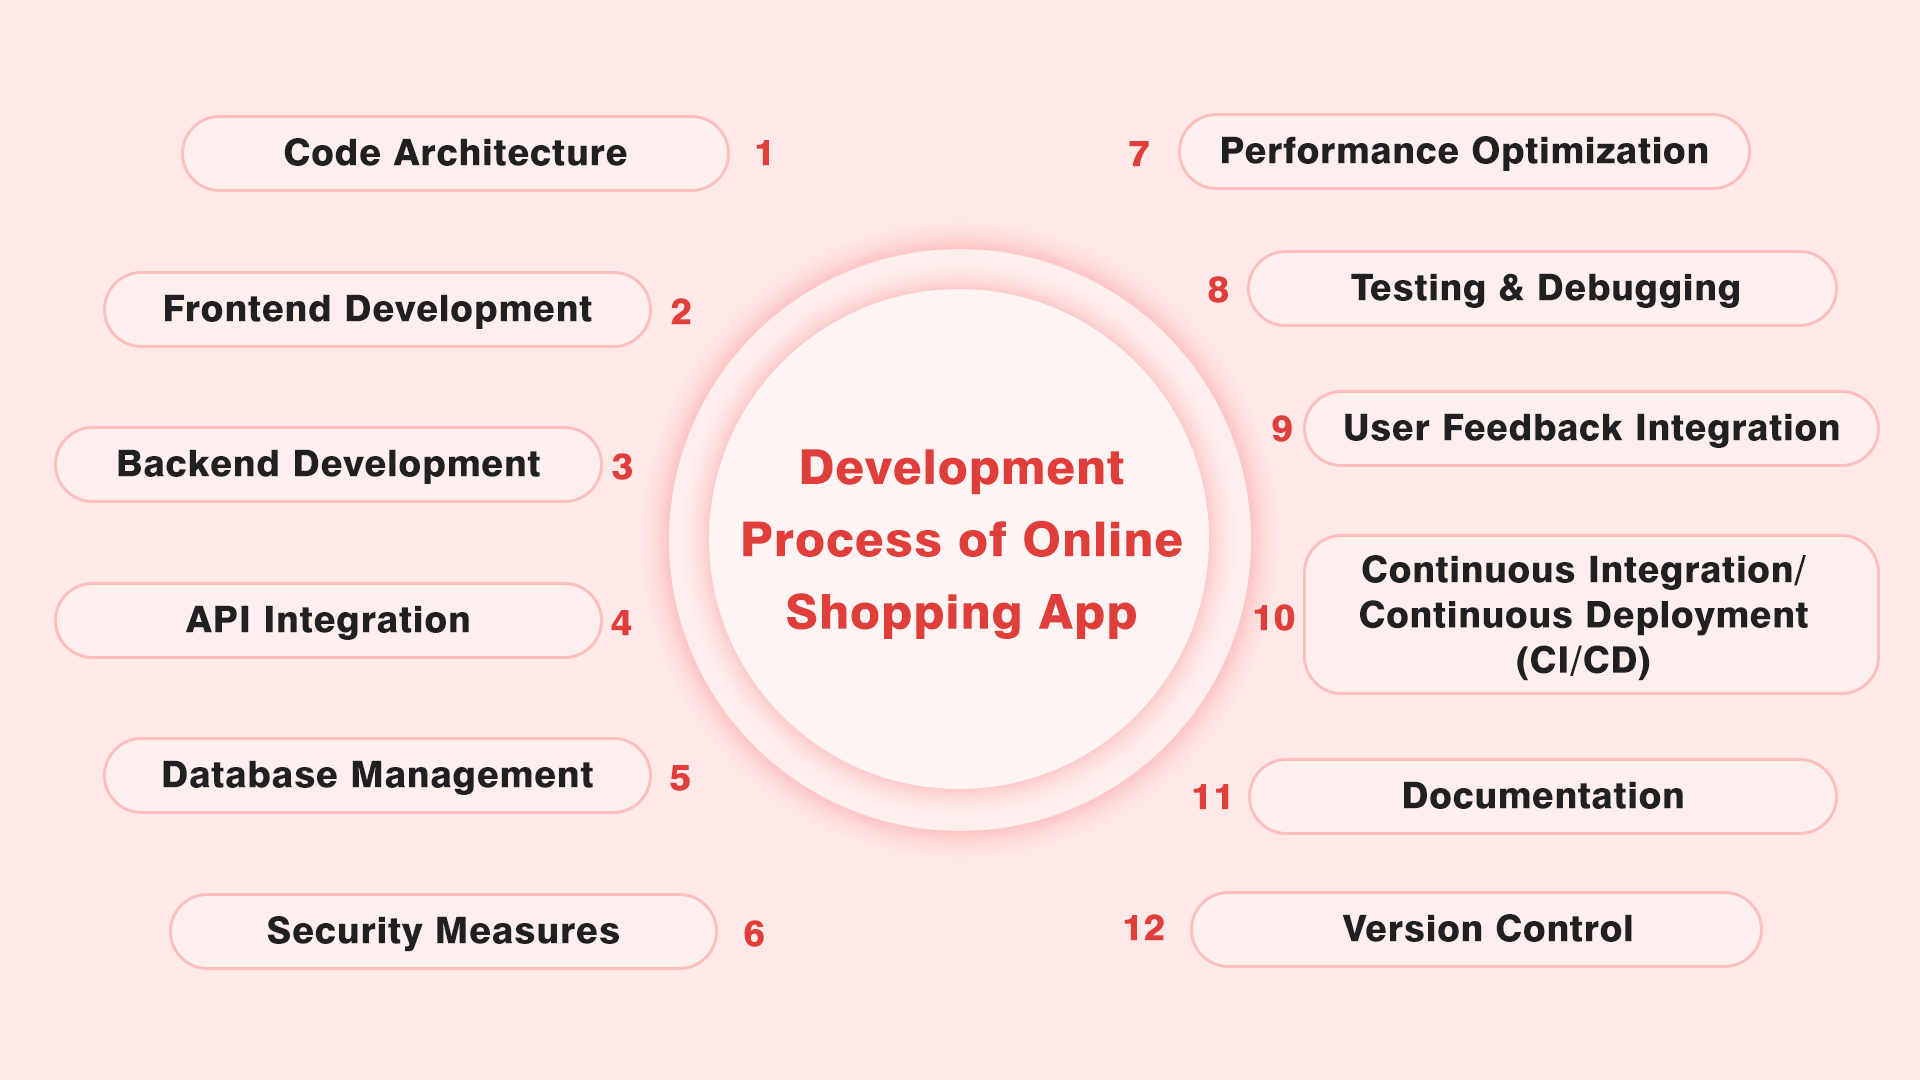 Development Process of Online Shopping App